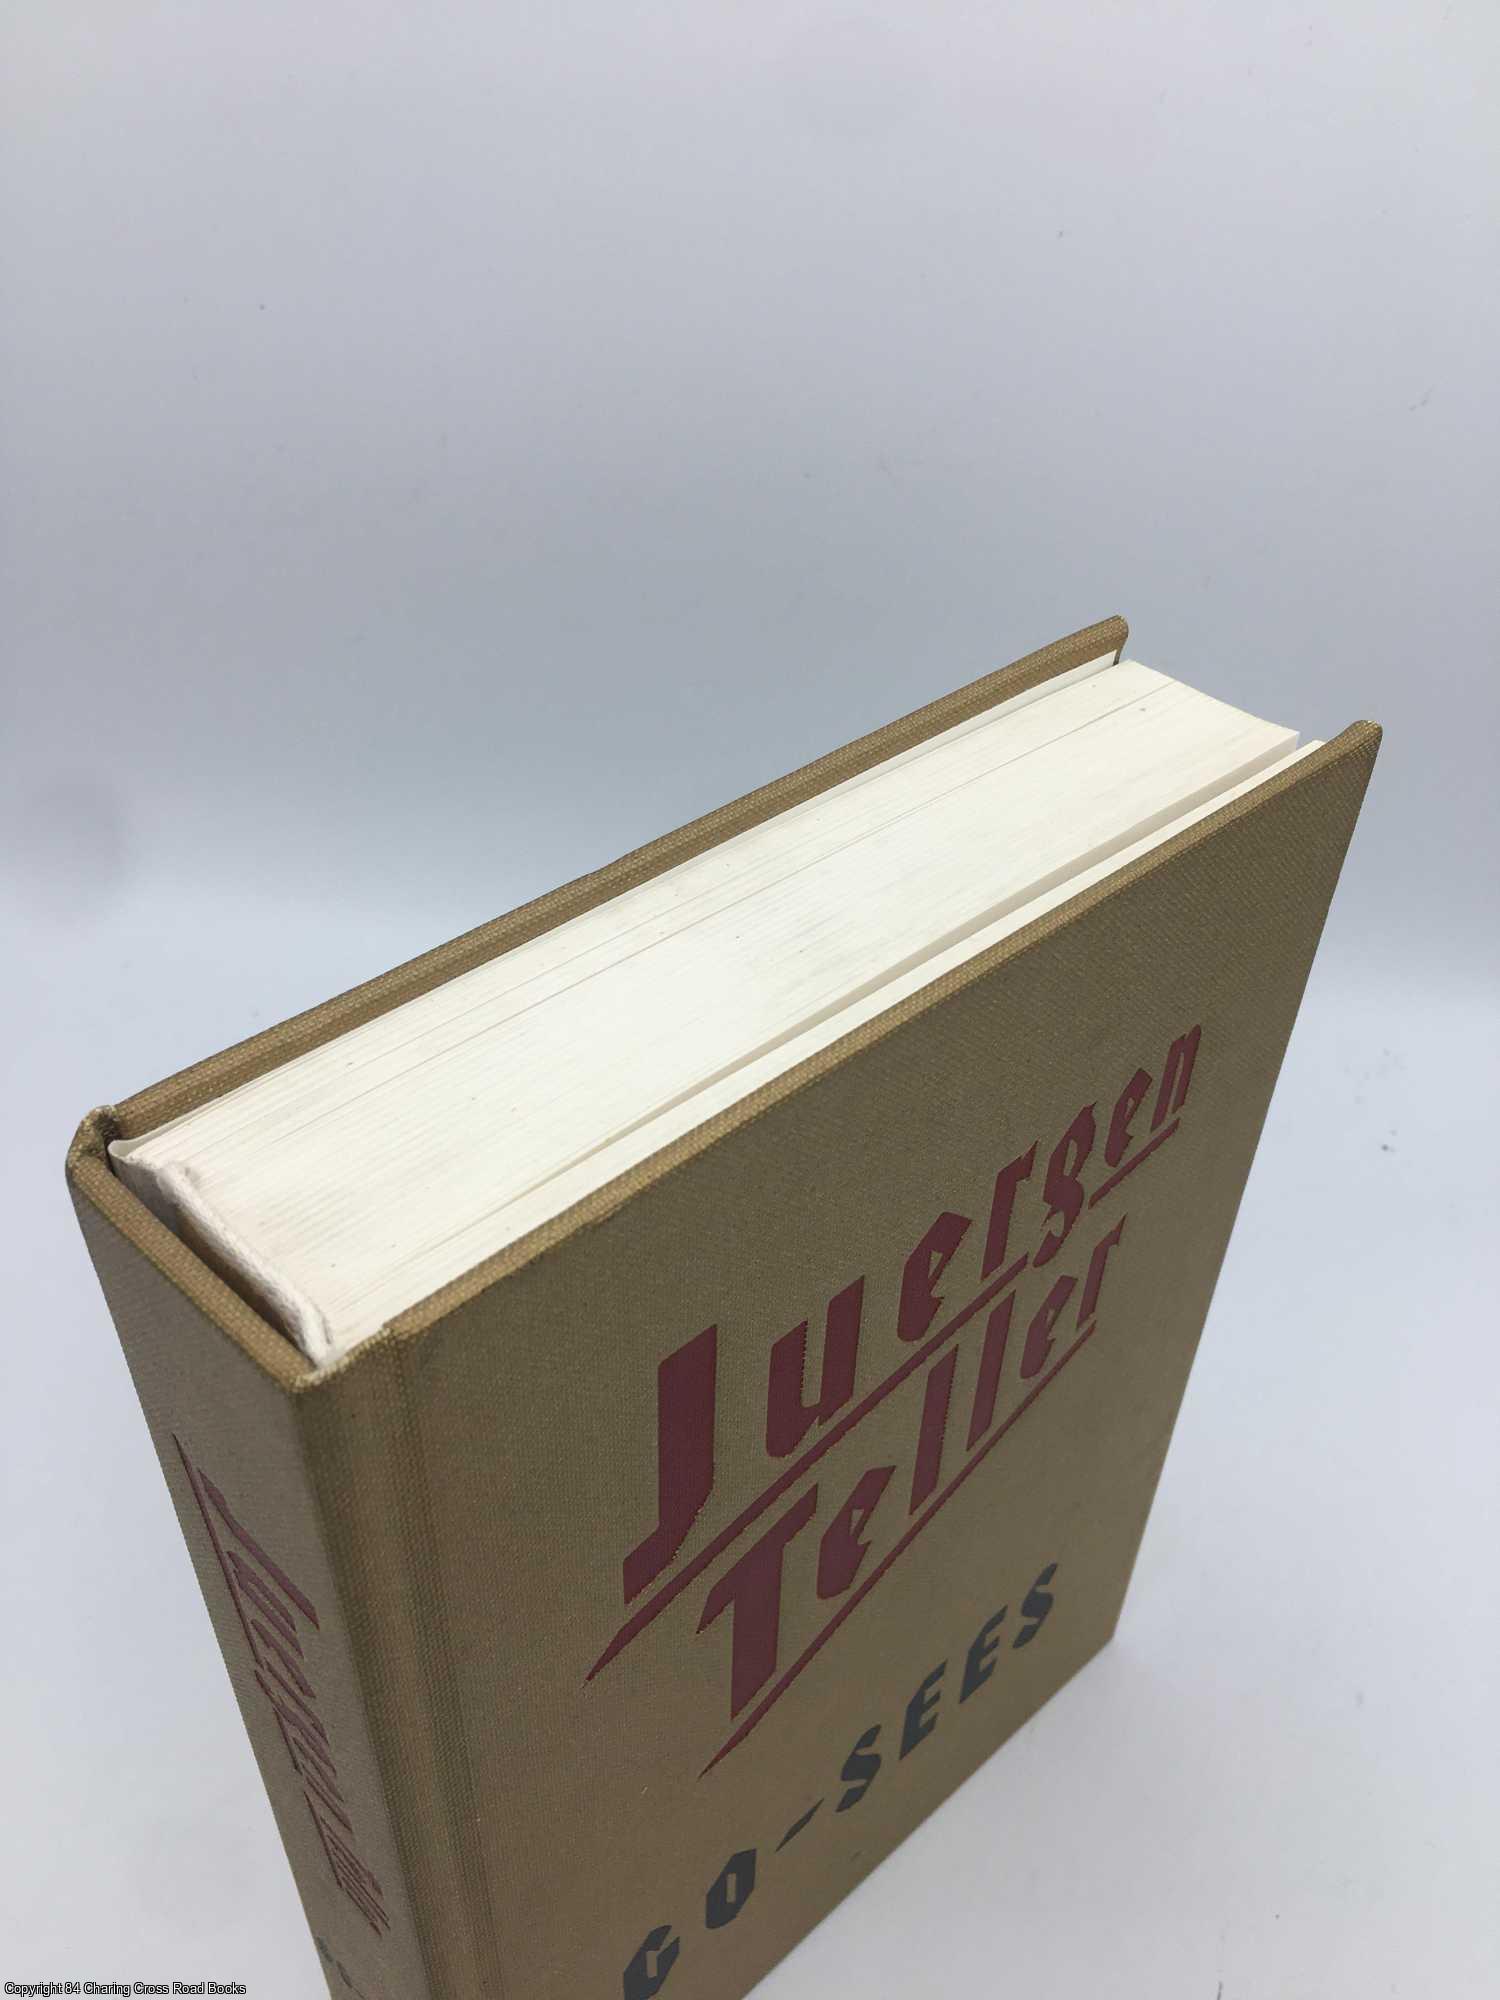 Juergen Teller Go-Sees by Juergen Teller on 84 Charing Cross Rare Books